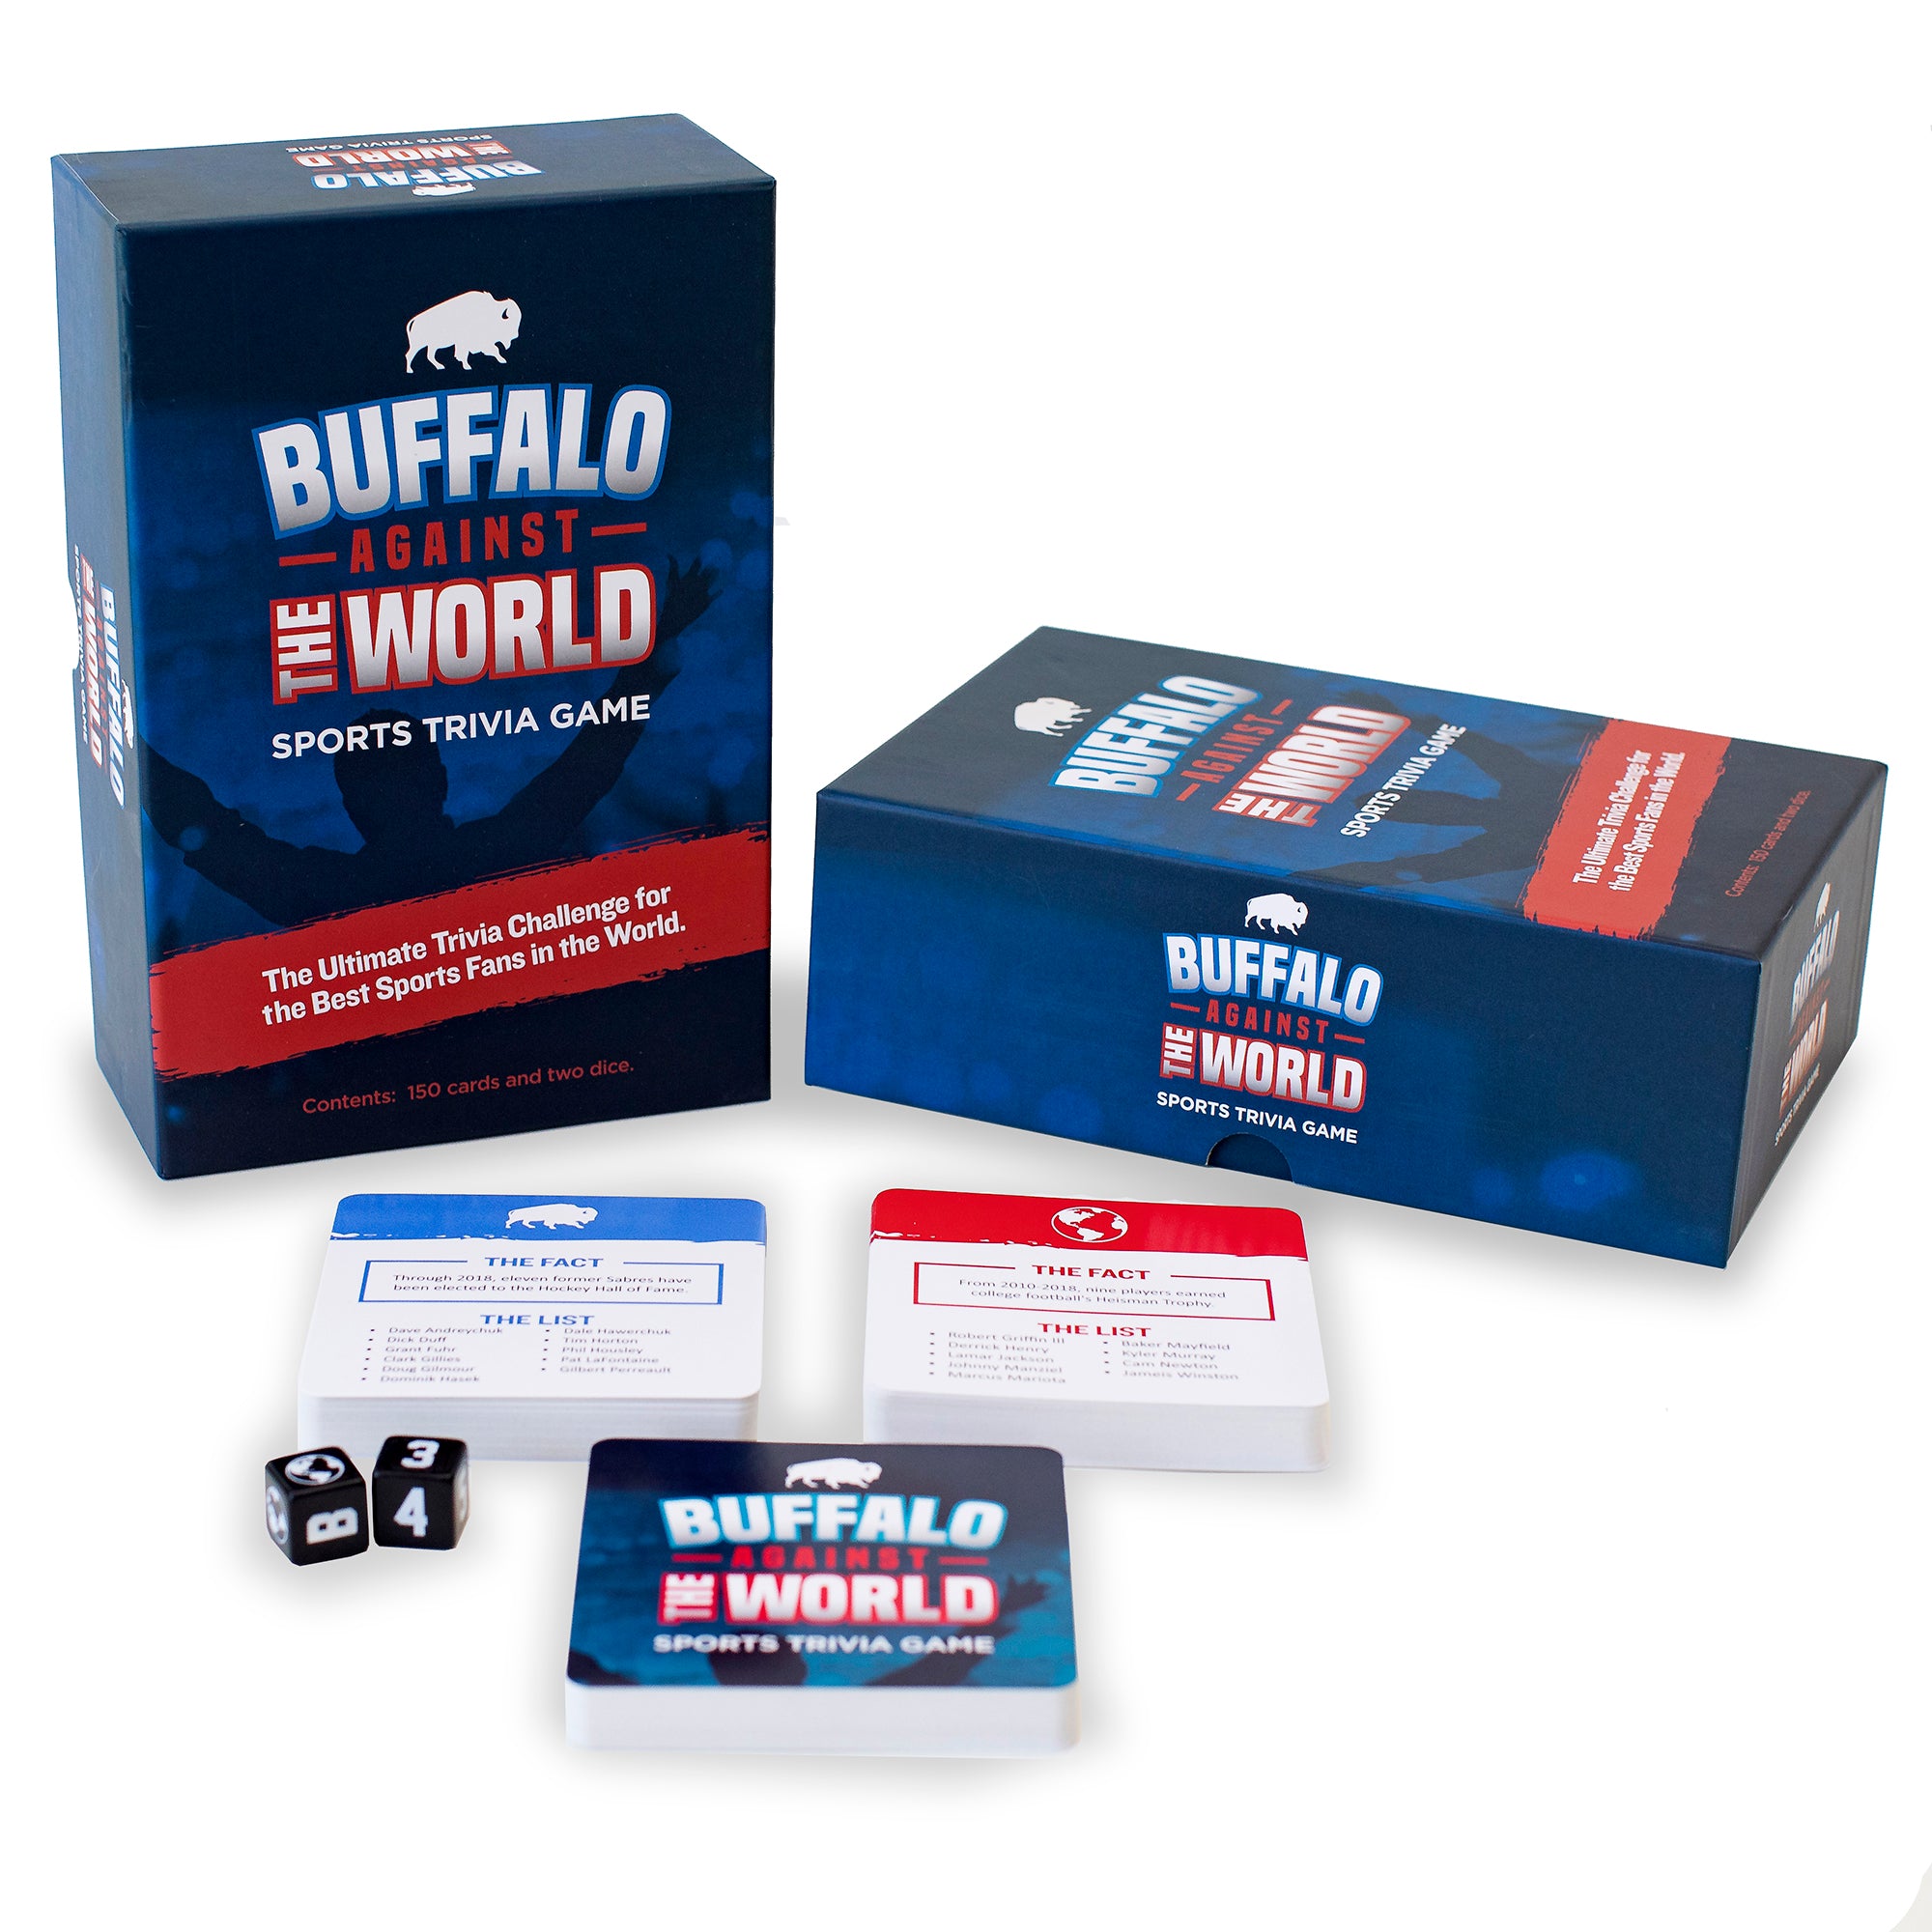 Buffalo Against The World Sports Trivia Game